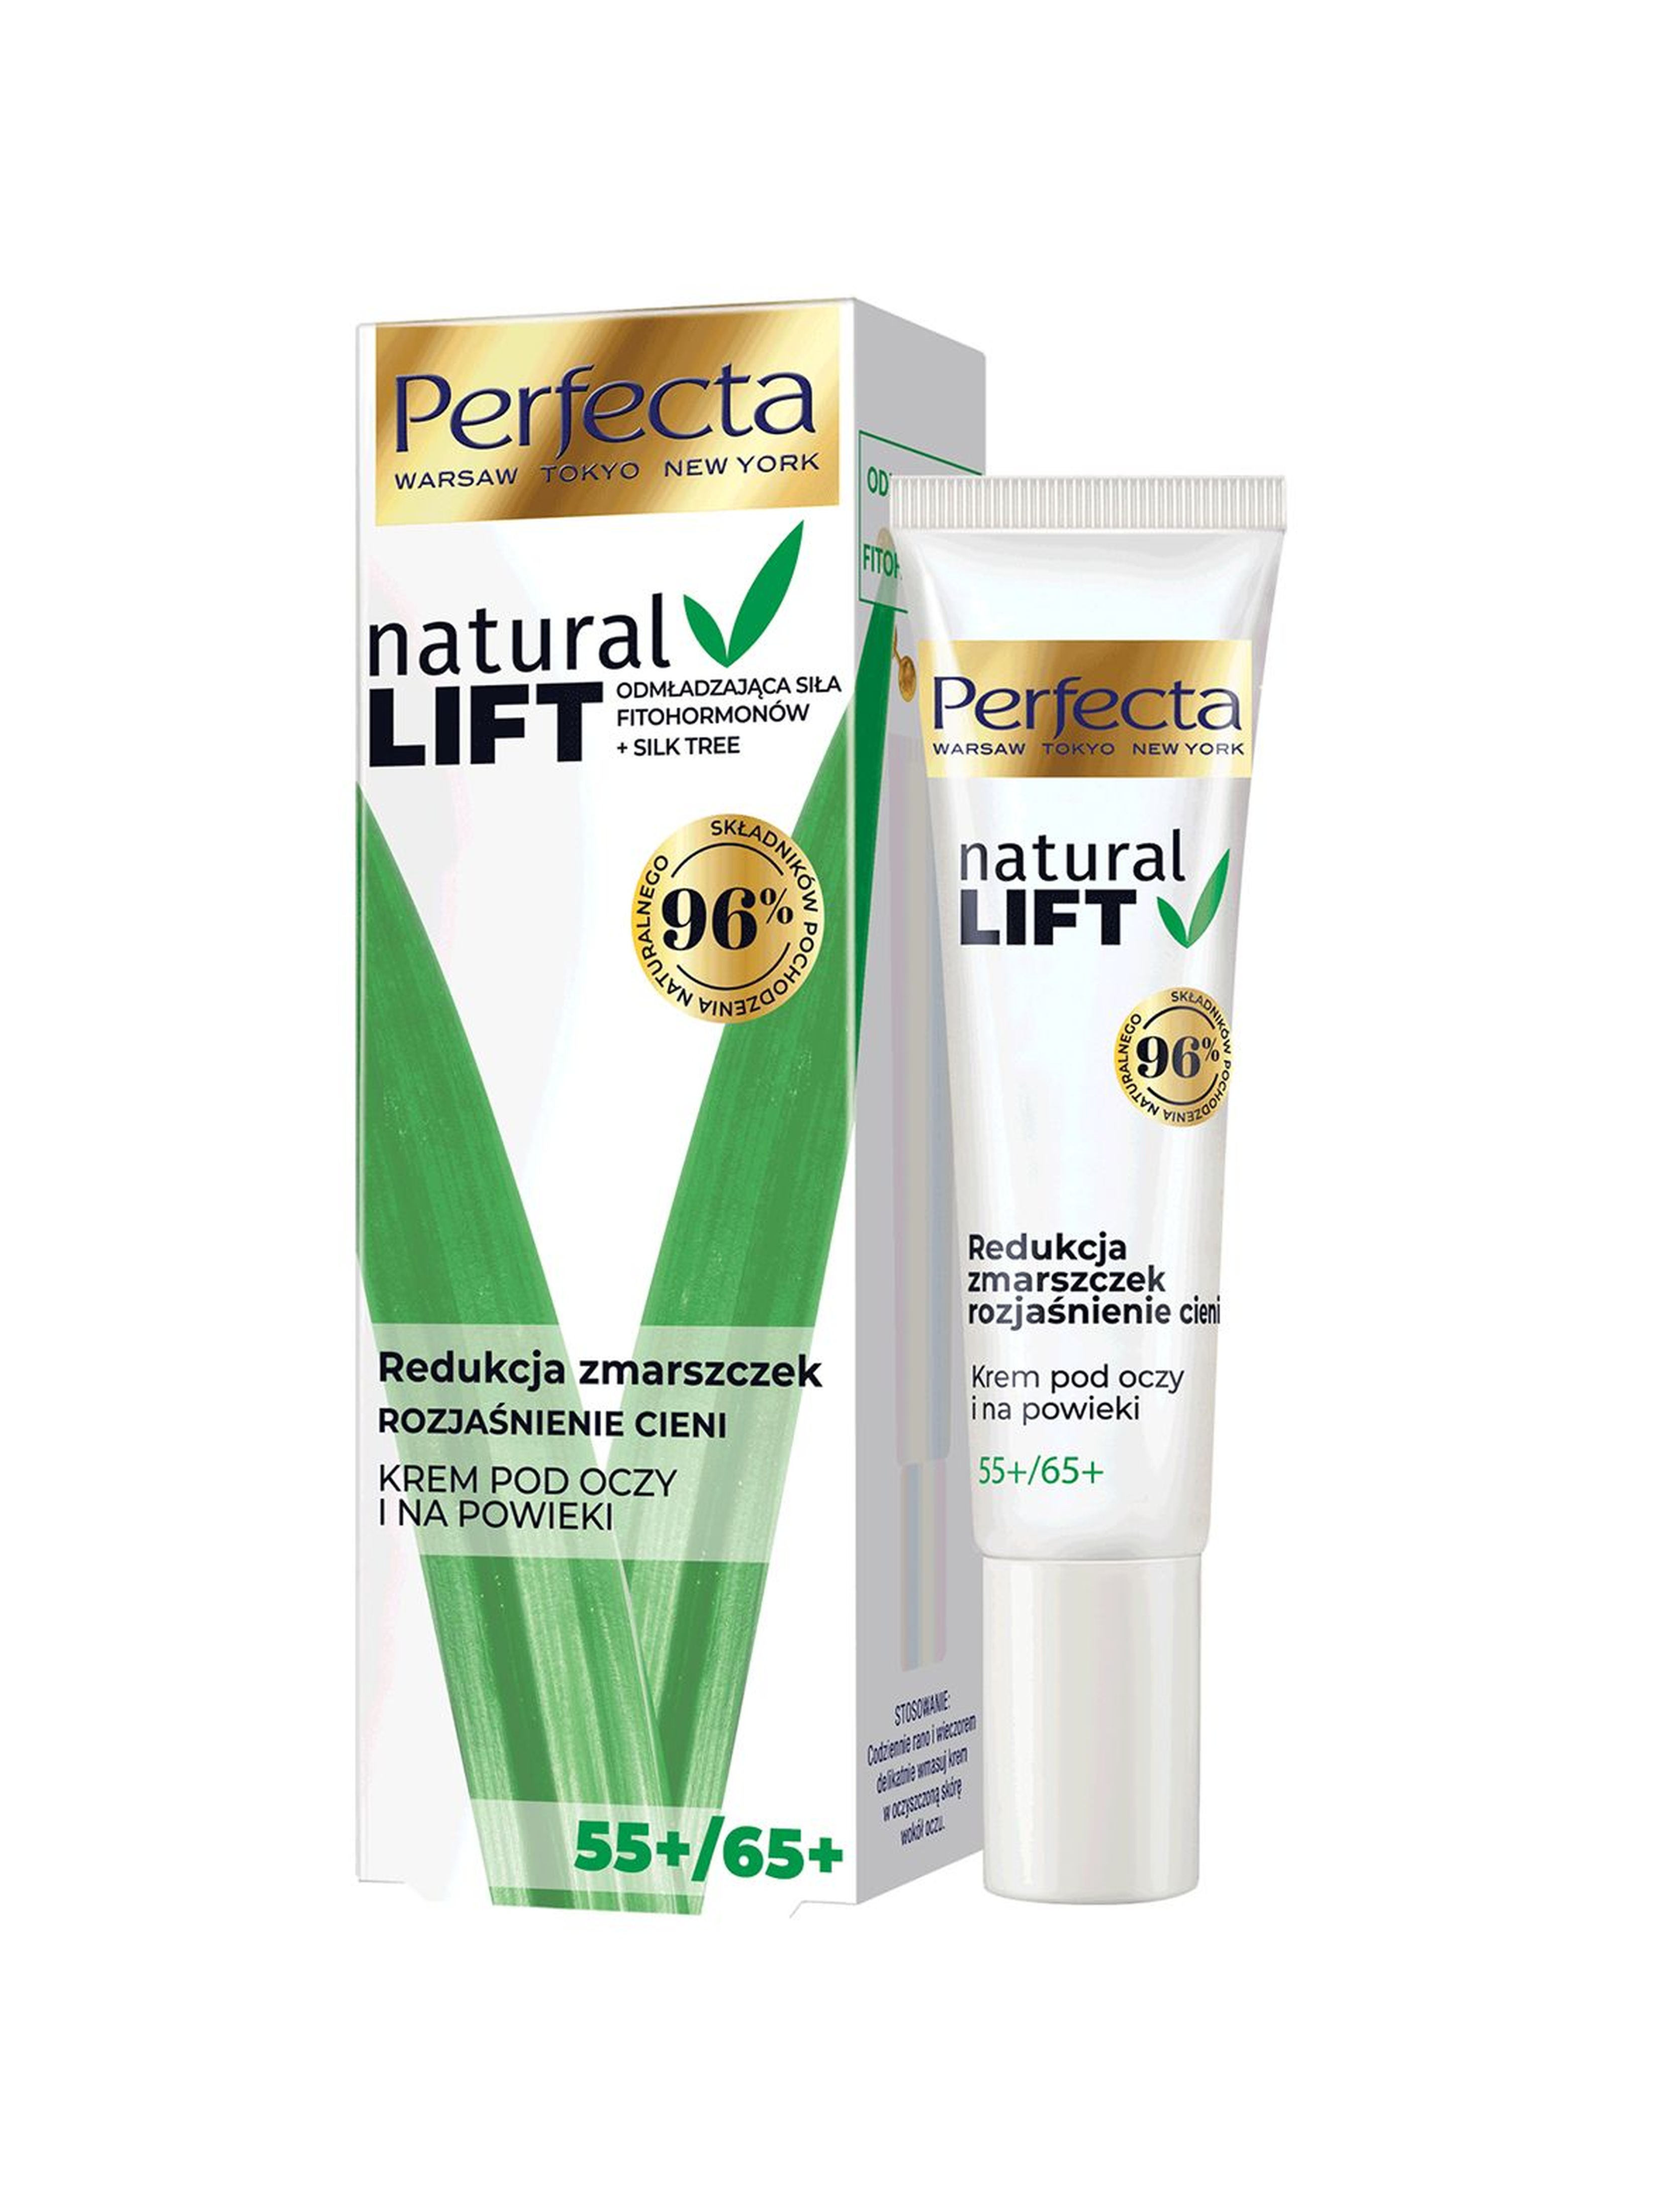 Perfecta Natural Lift, krem pod oczy i na powieki - 55/65+, 15 ml